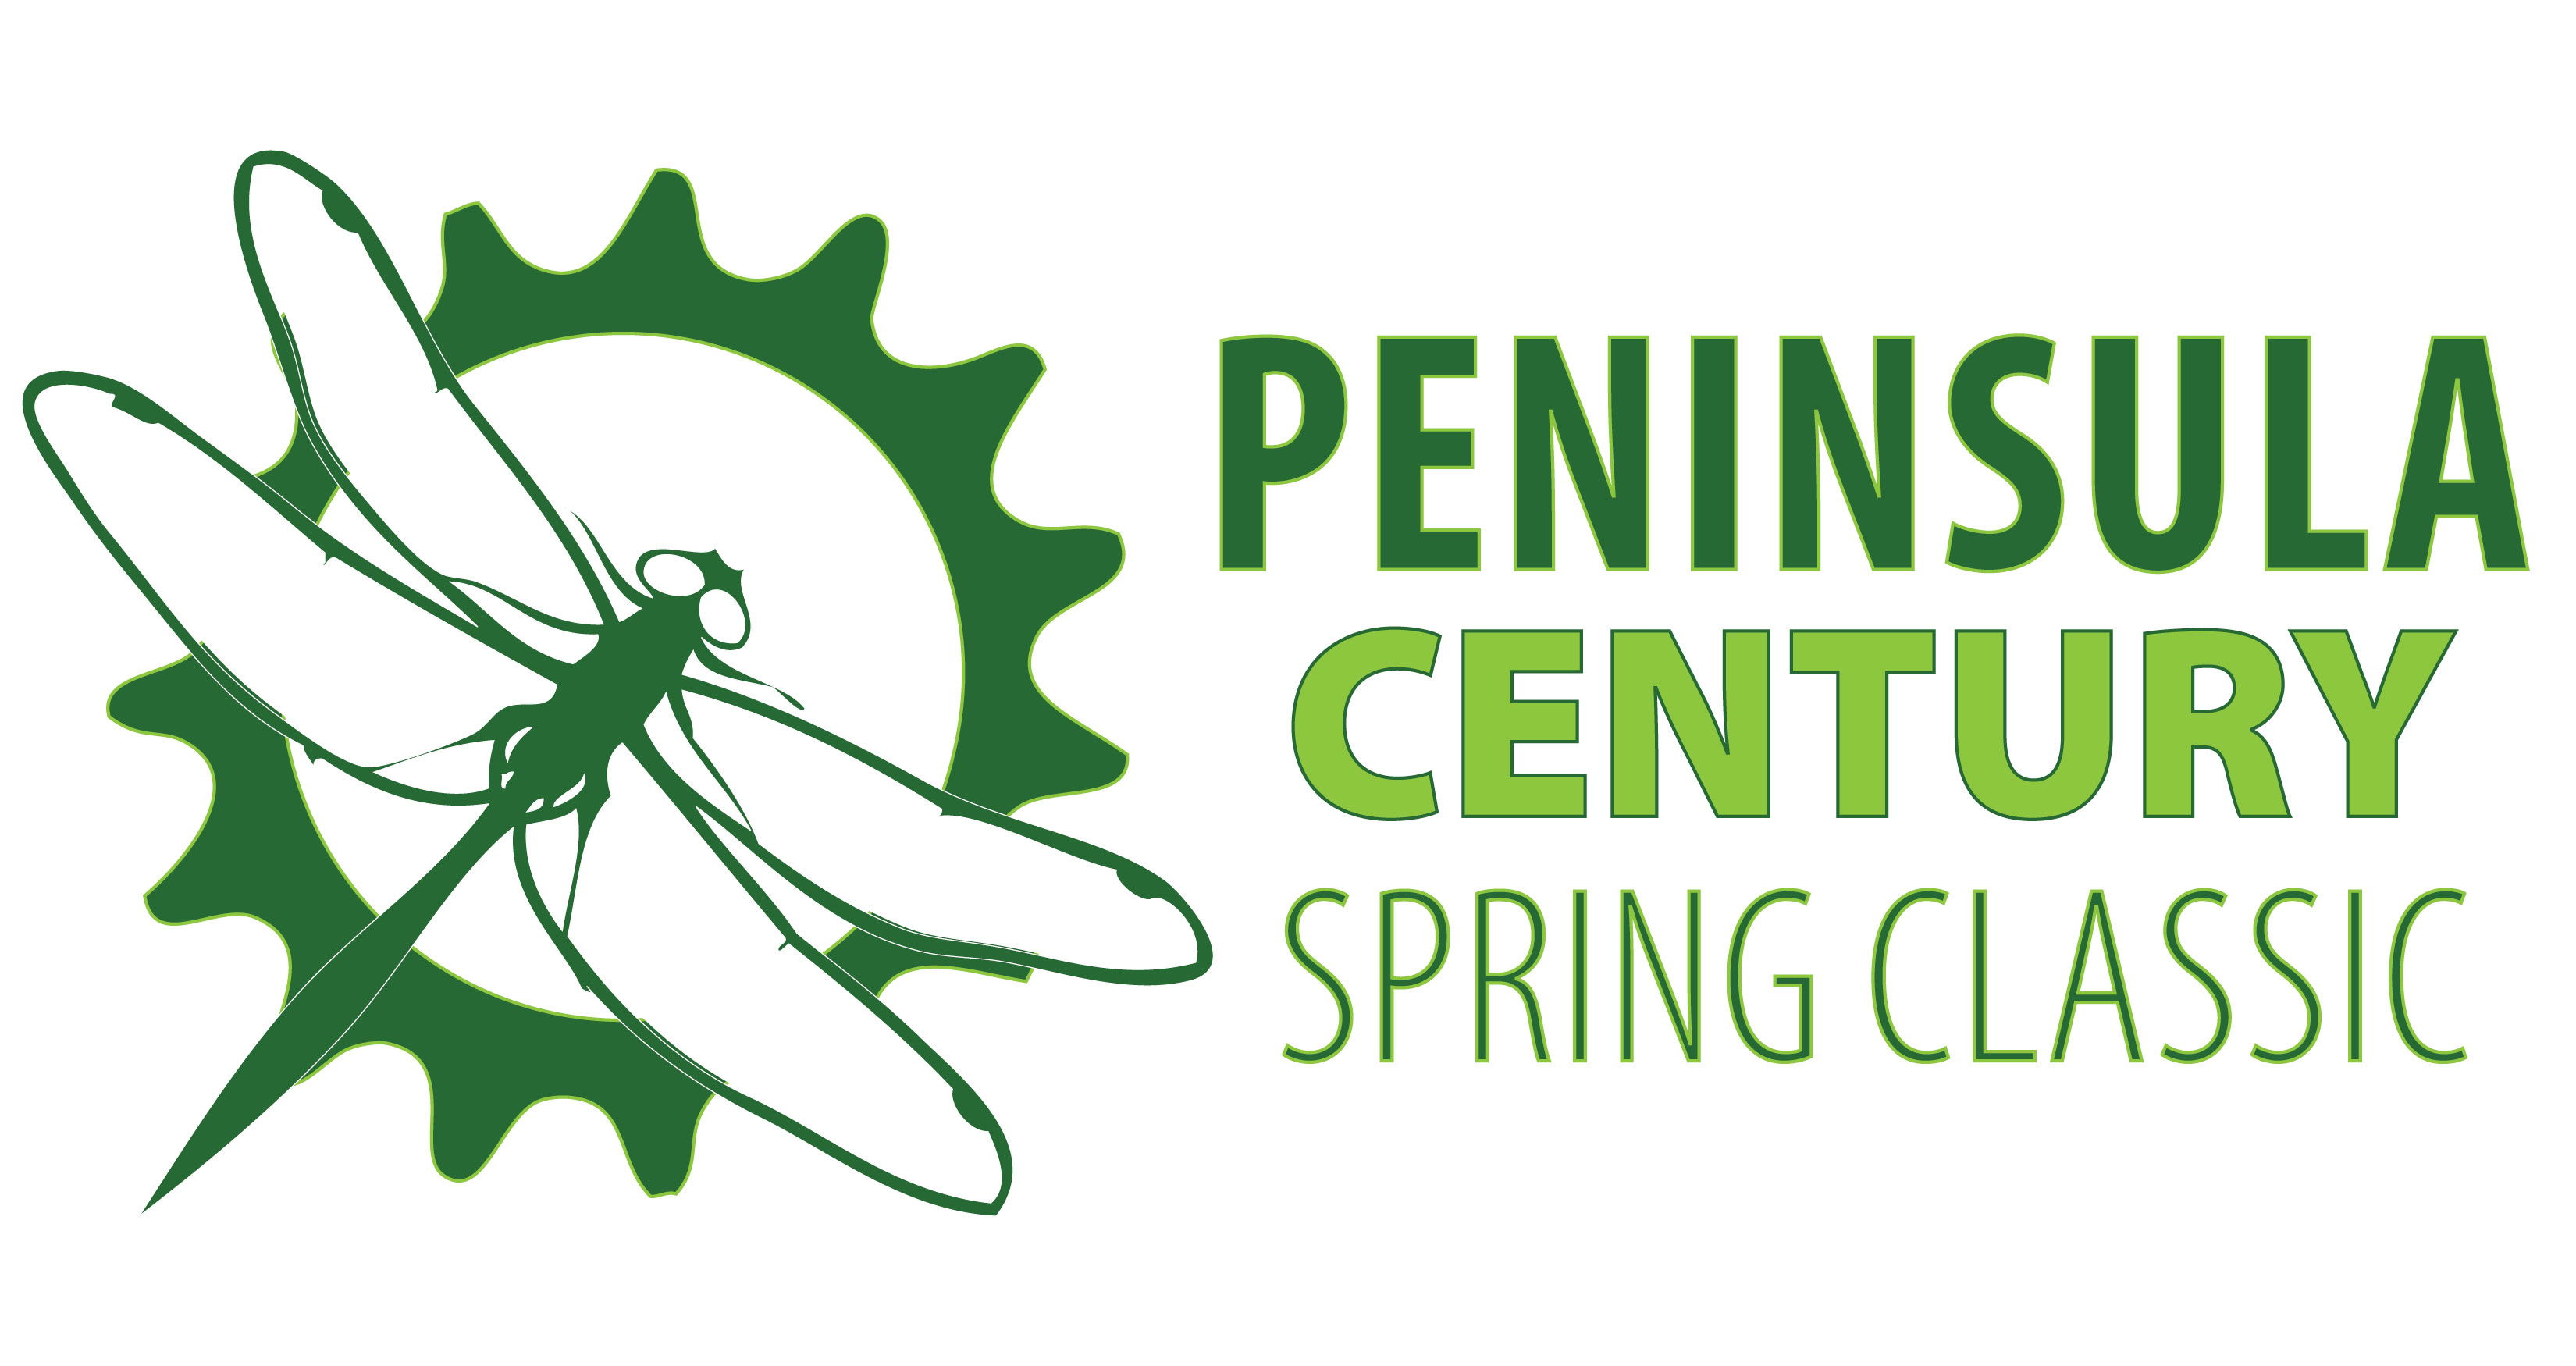 Peninsula Century Spring Classic — The spring Door County century ride